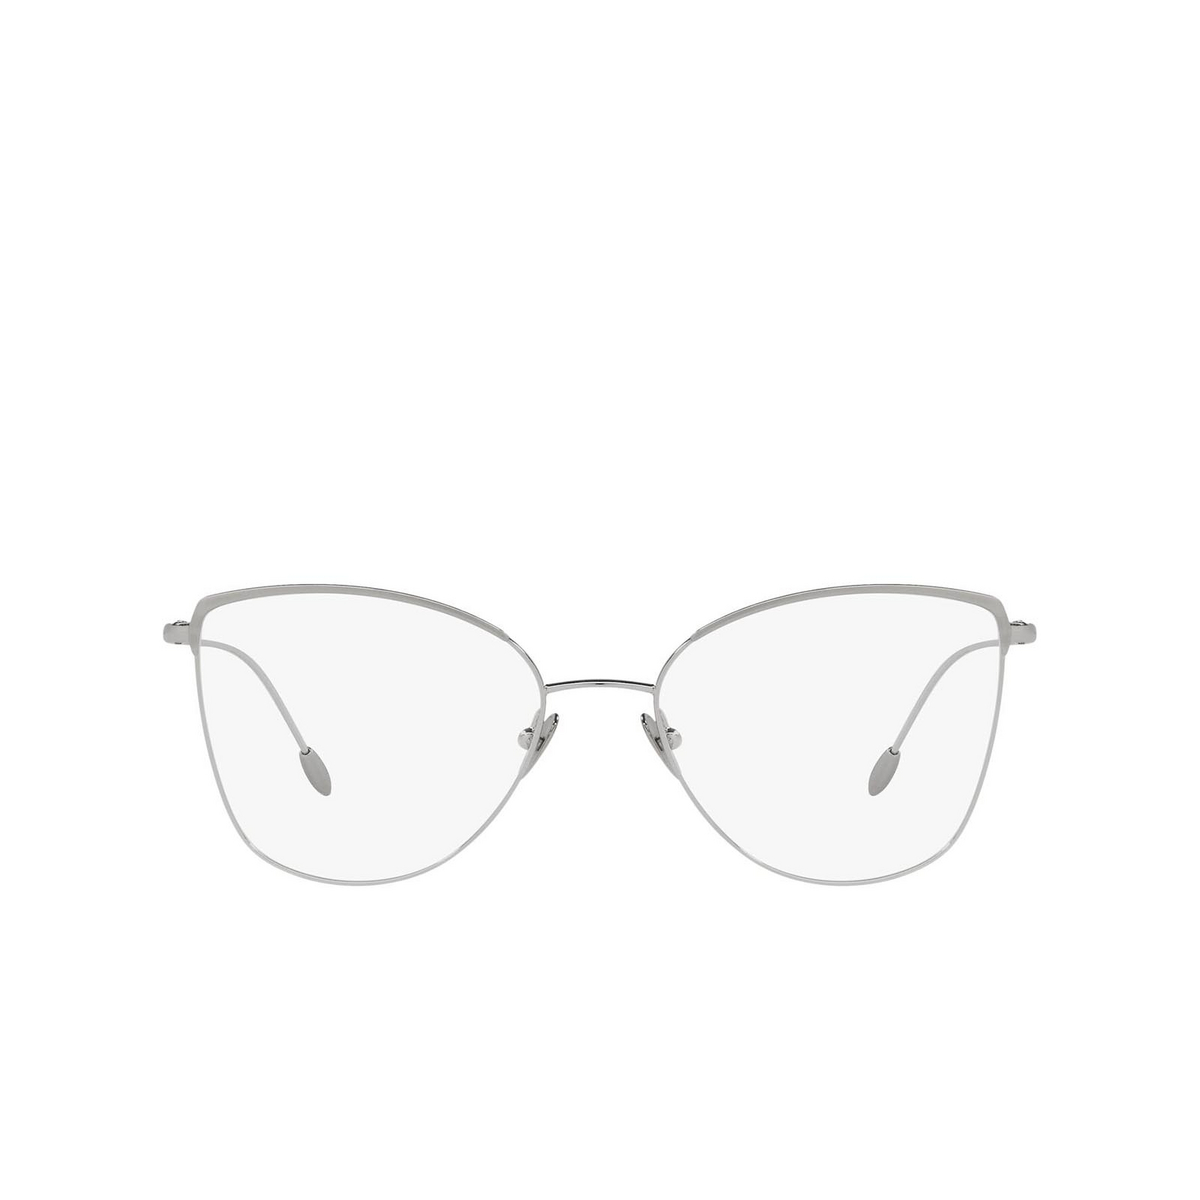 Giorgio Armani AR5110 Eyeglasses 3015 Matte/Shiny Silver - front view